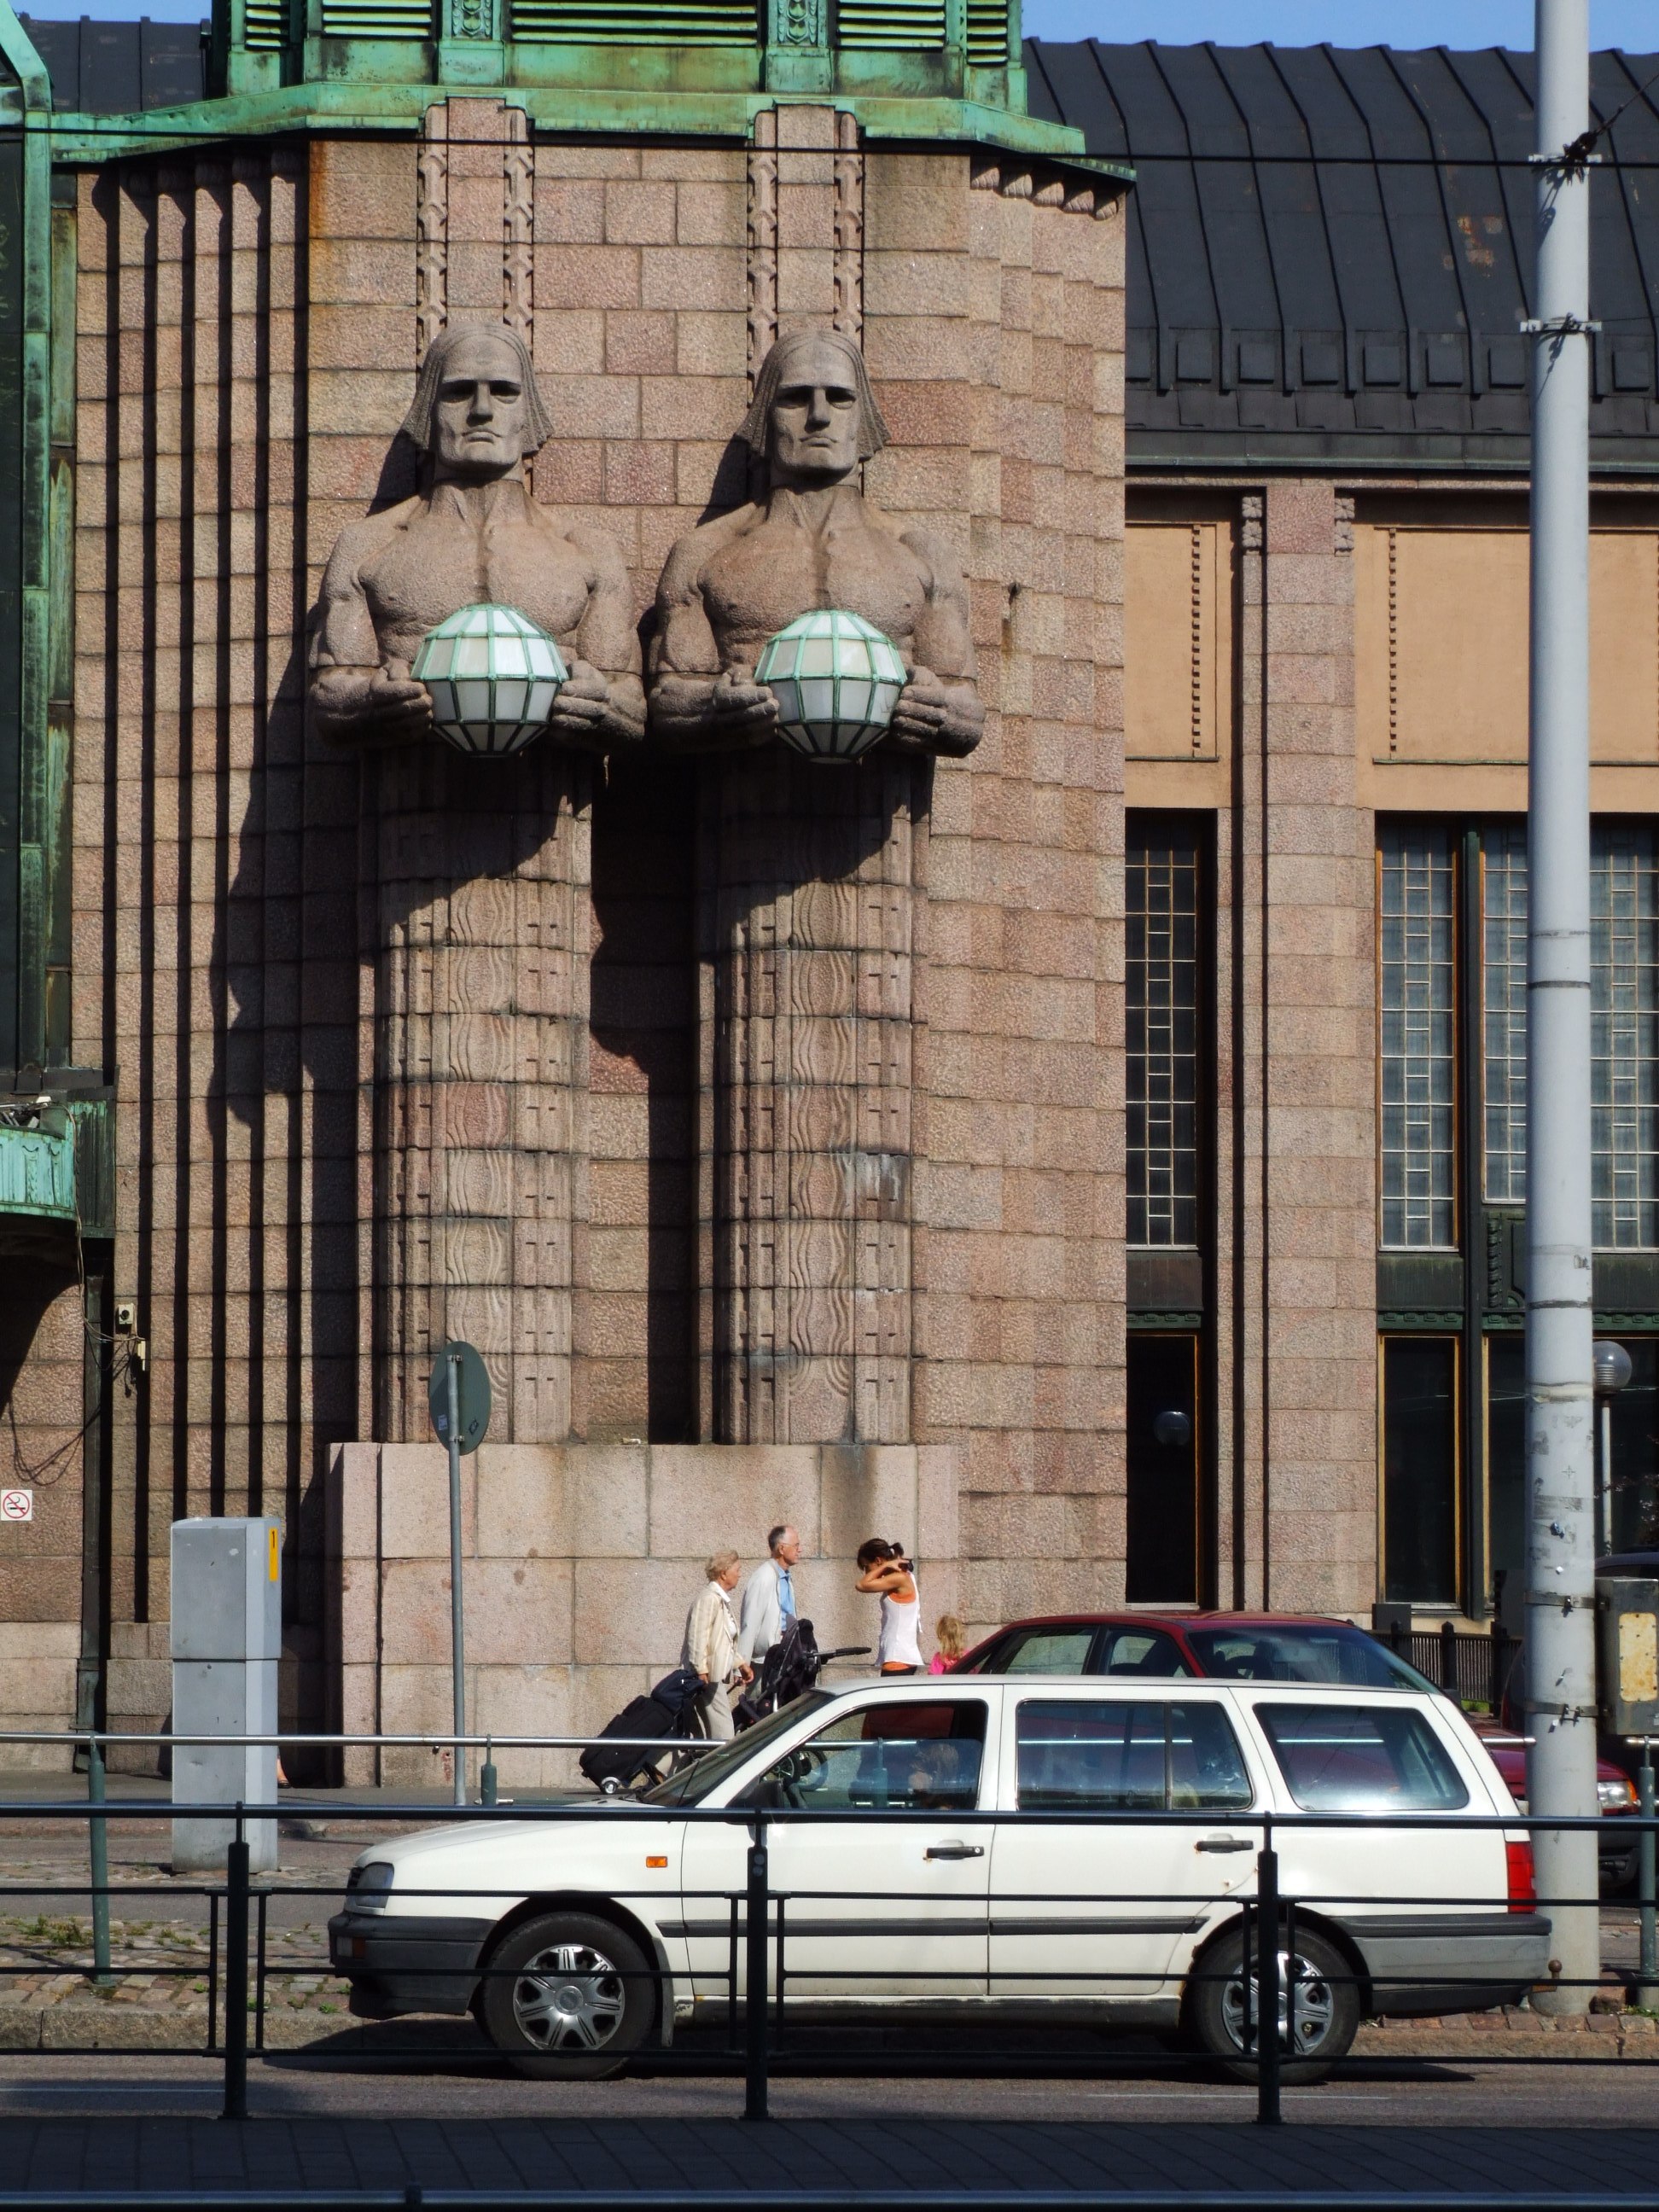 Helsinki Central Railway Station - statues